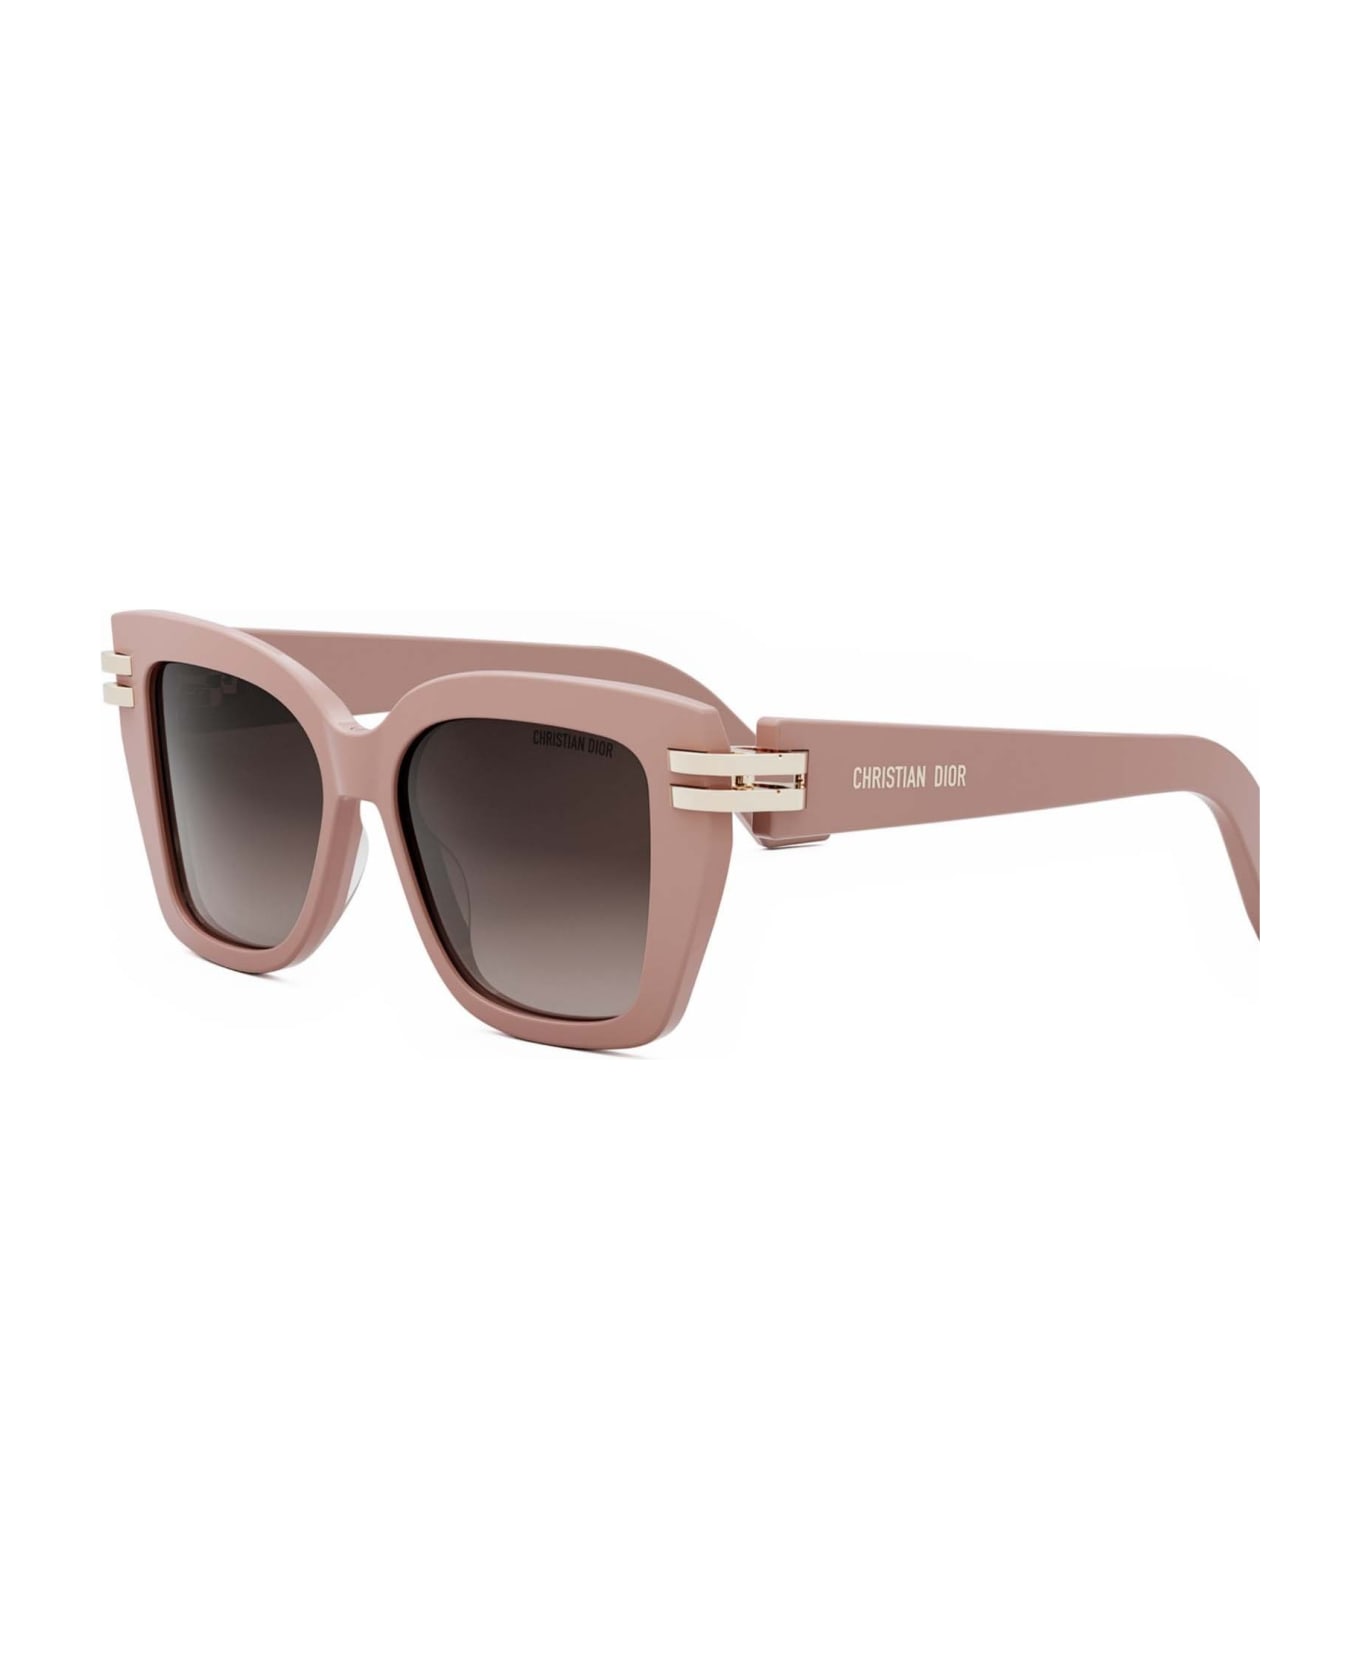 Dior Eyewear Sunglasses - Rosa/Marrone sfumato